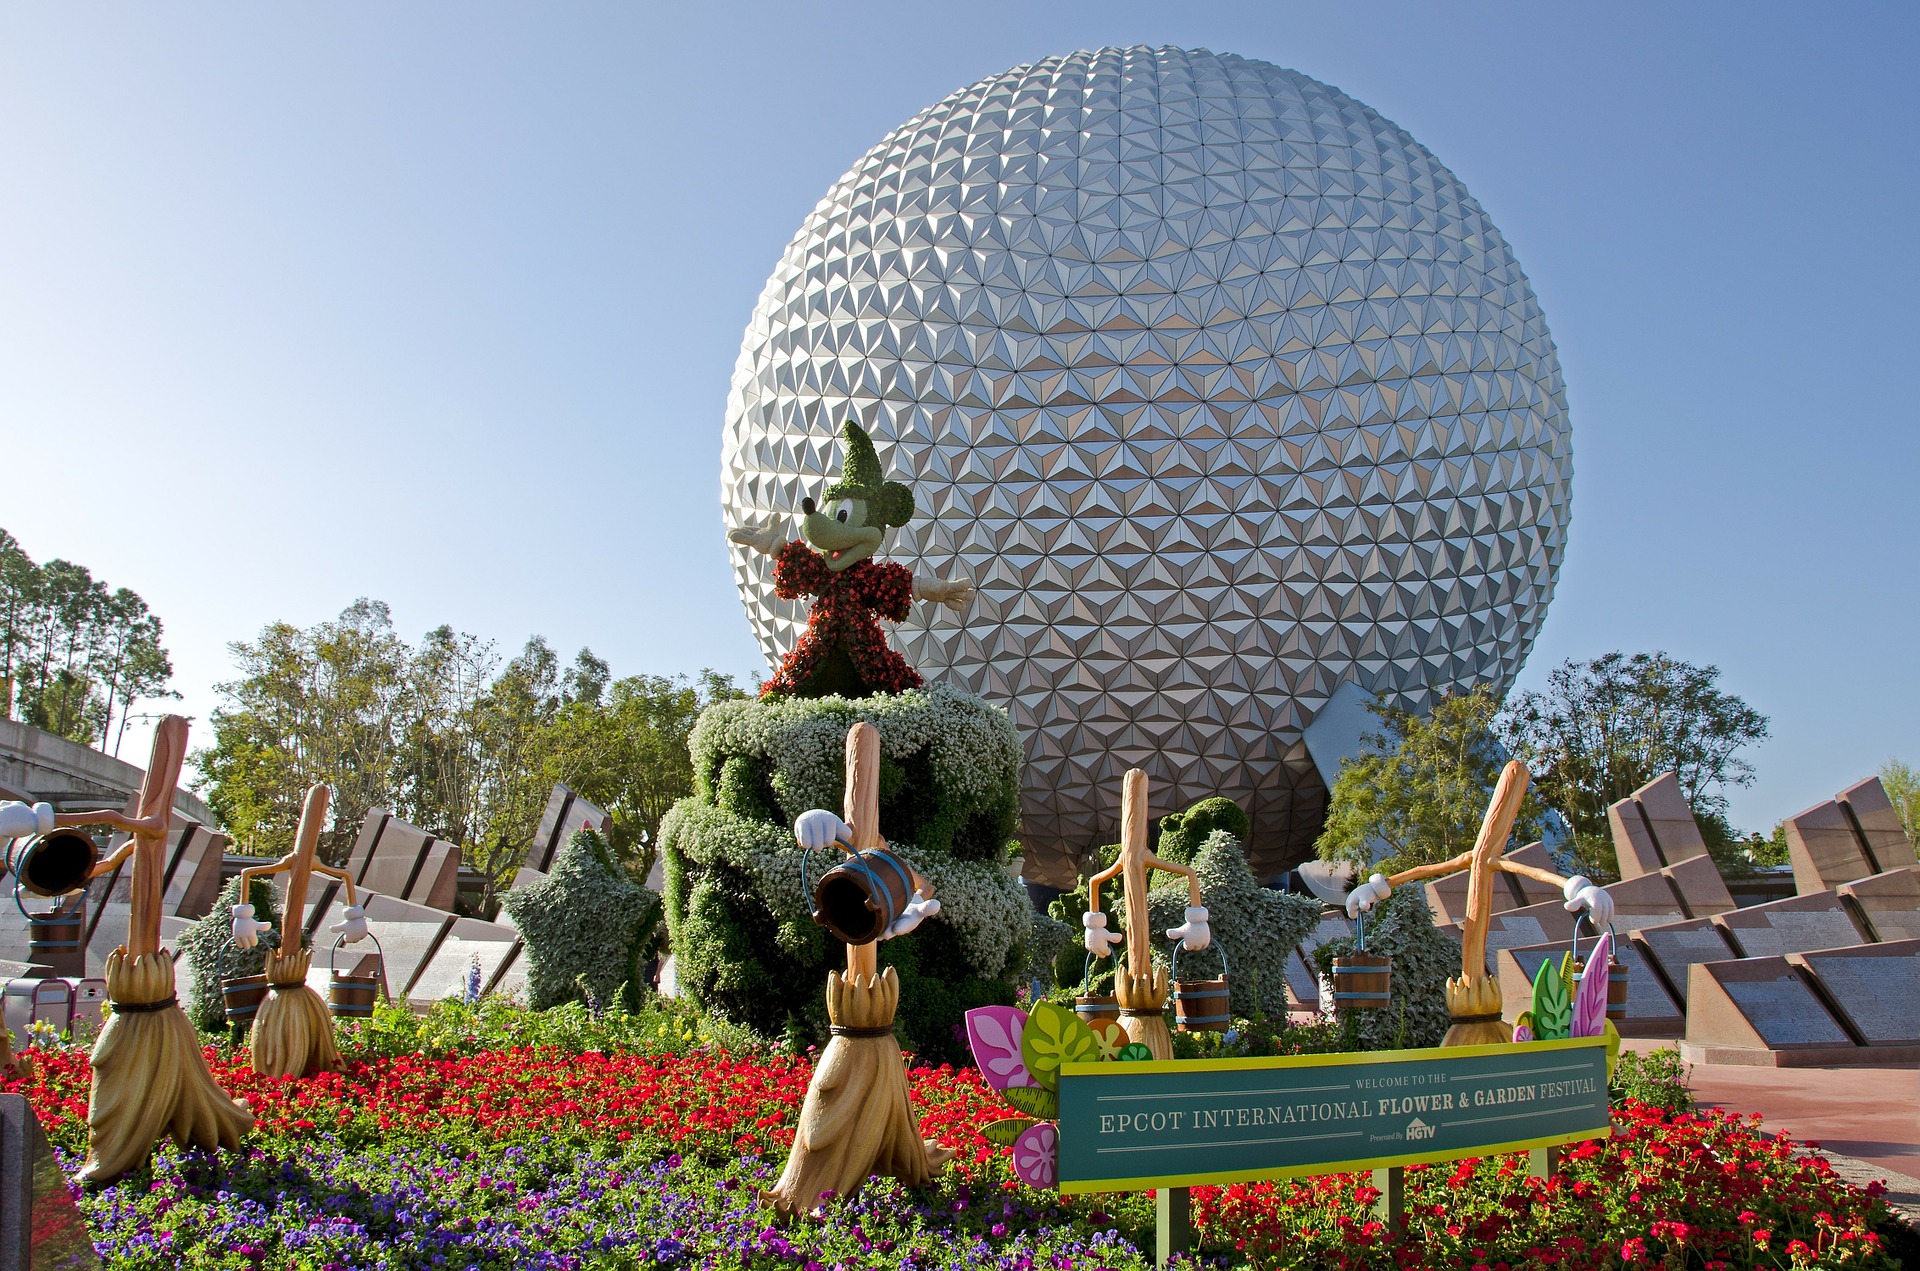 Walt Disney World Epcot International Flower & Garden Festival